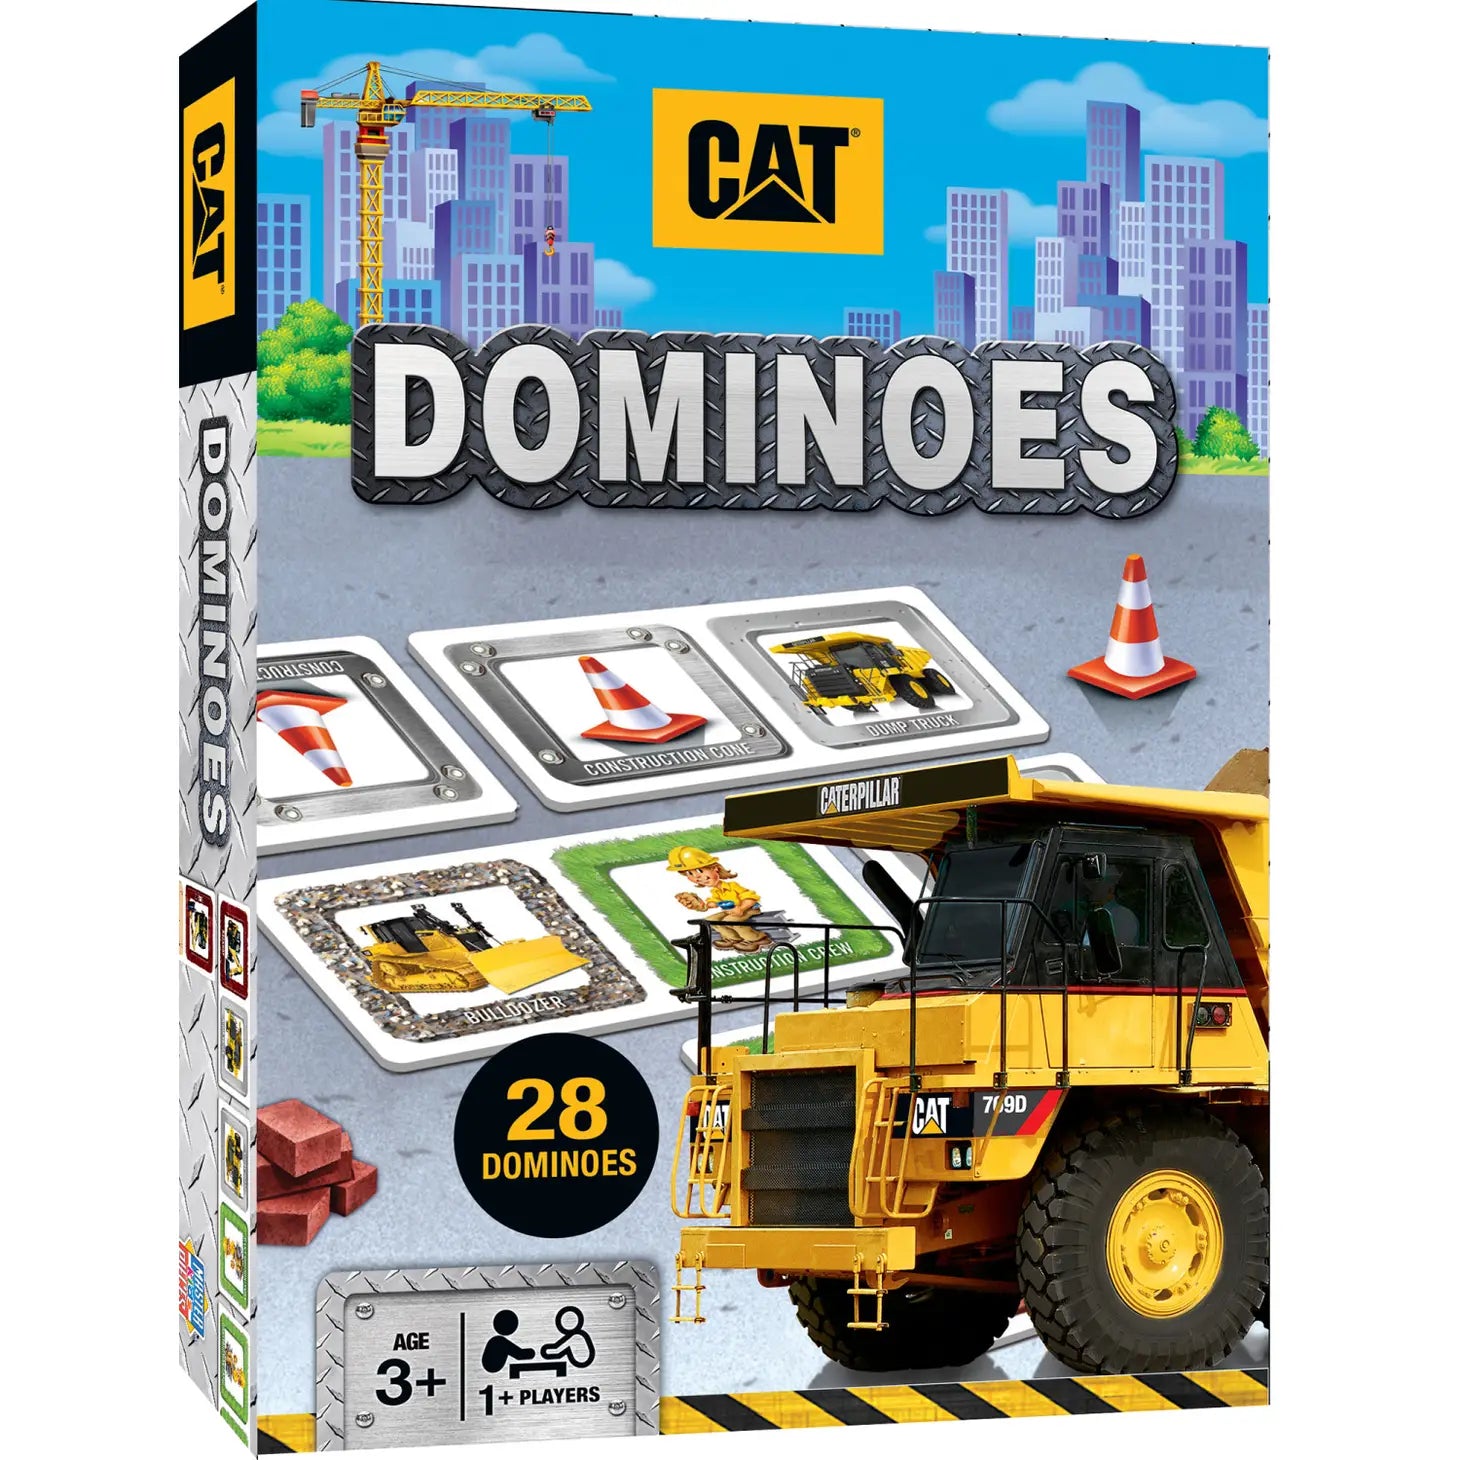 CAT Caterpillar Dominoes